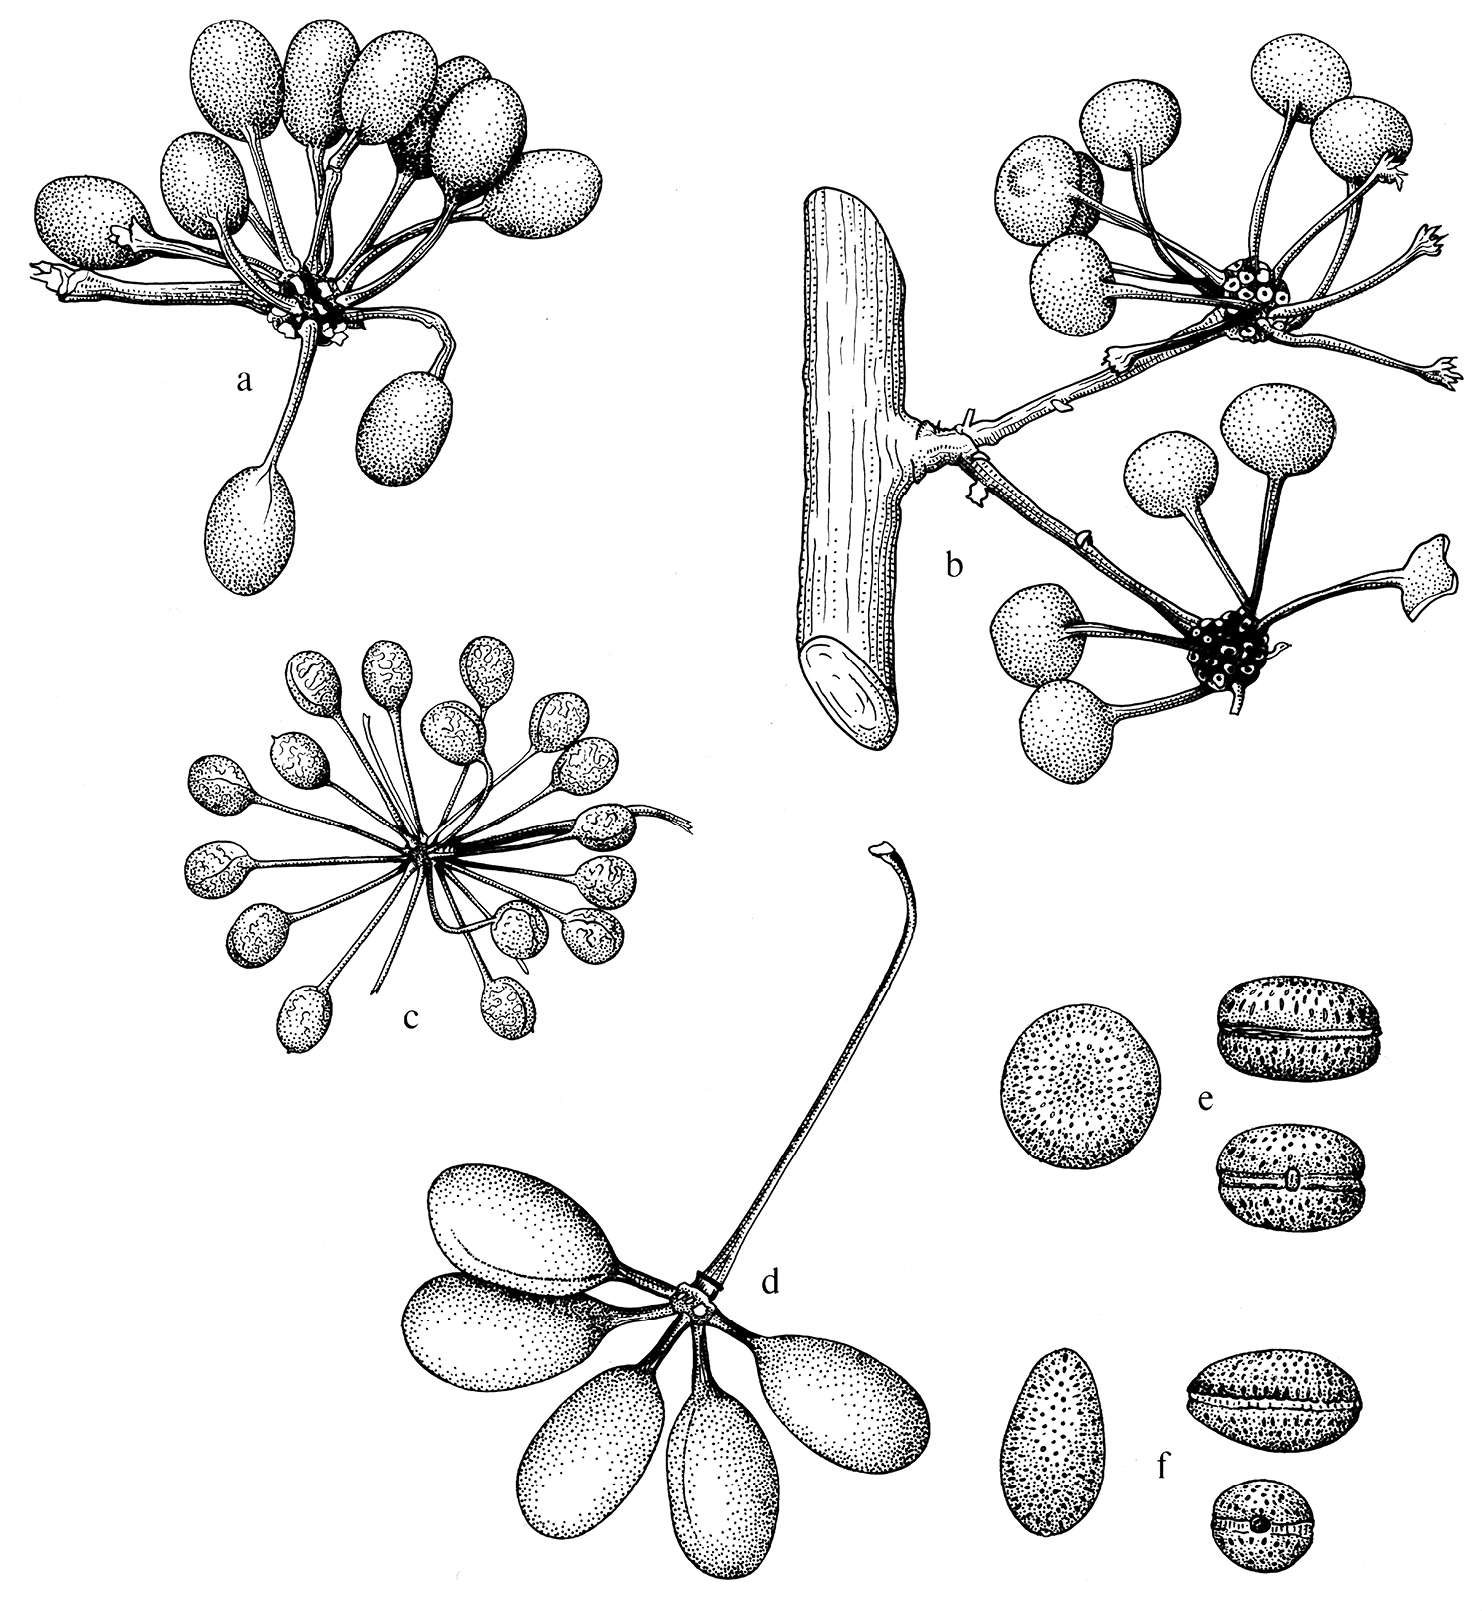 Image of Cremastosperma megalophyllum R. E. Fr.